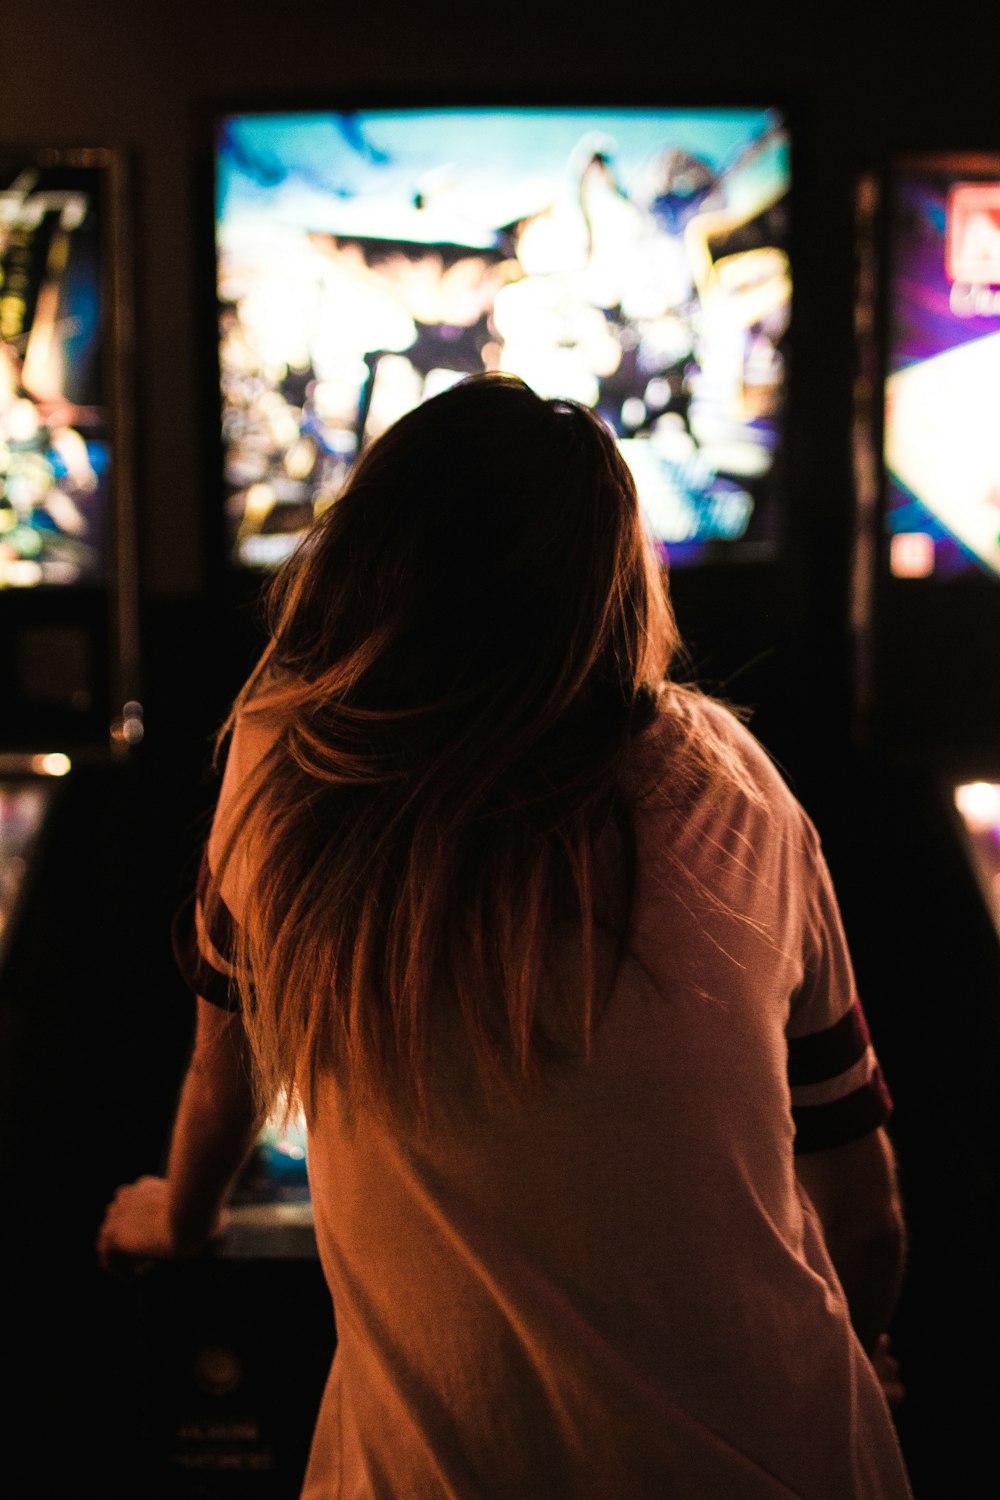 woman playing arcade